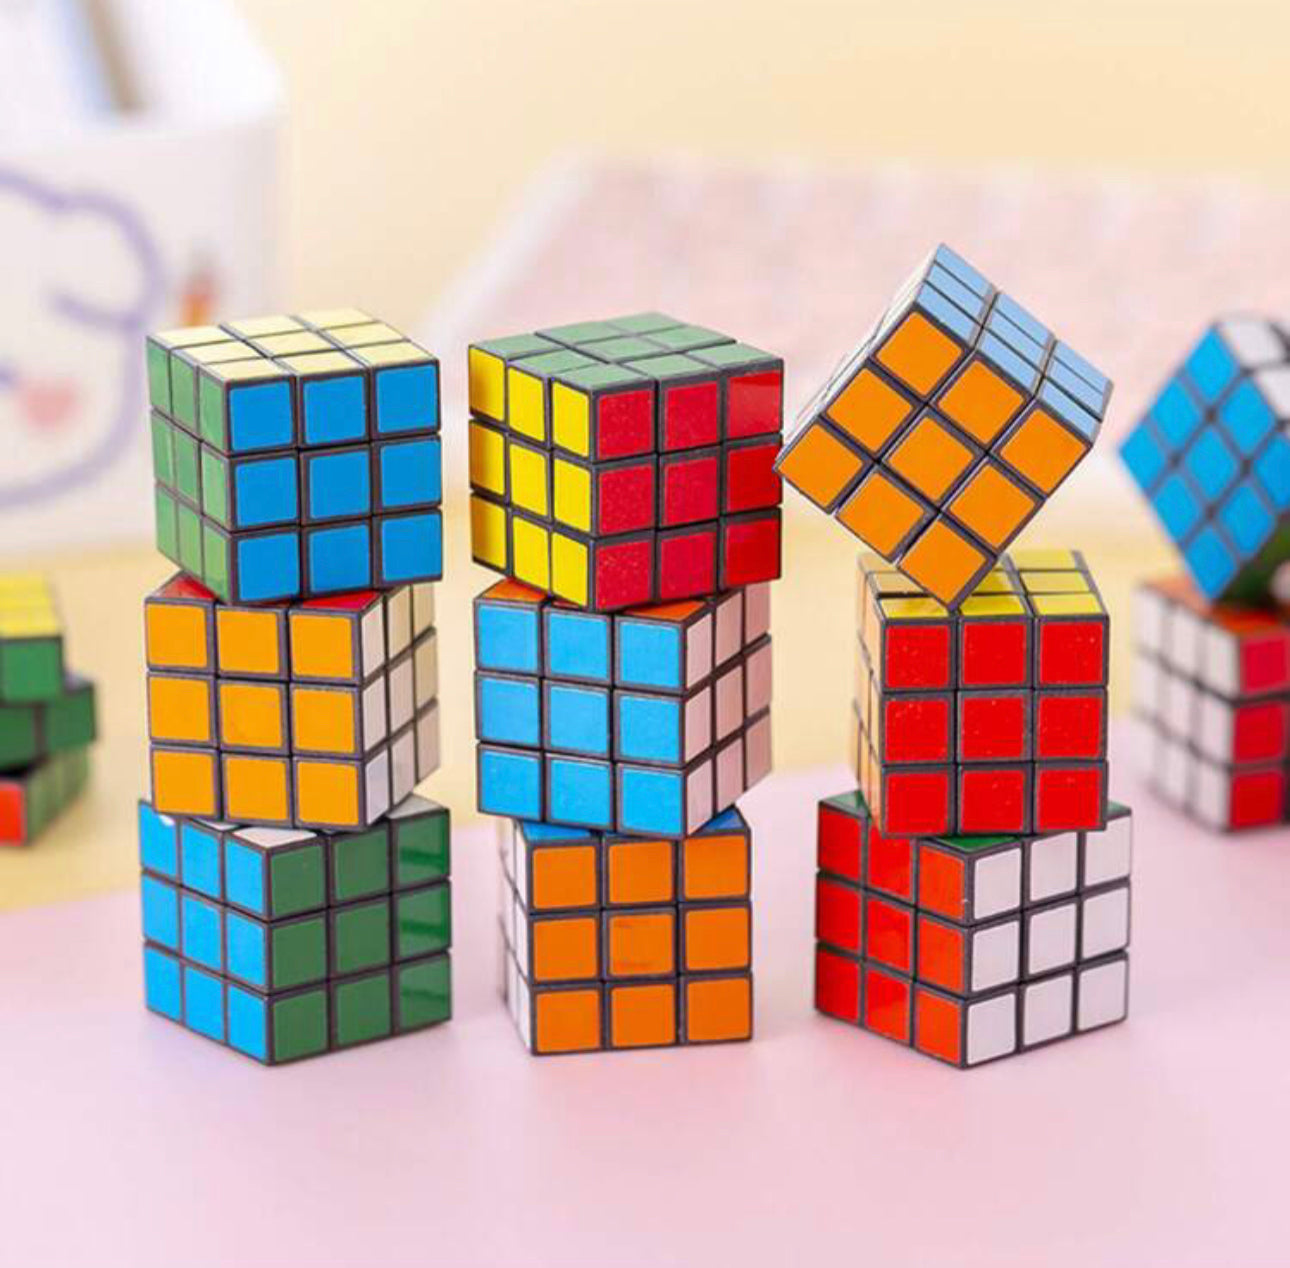 1 cubo mágico 3x3x3 rompecabezas de juguete,